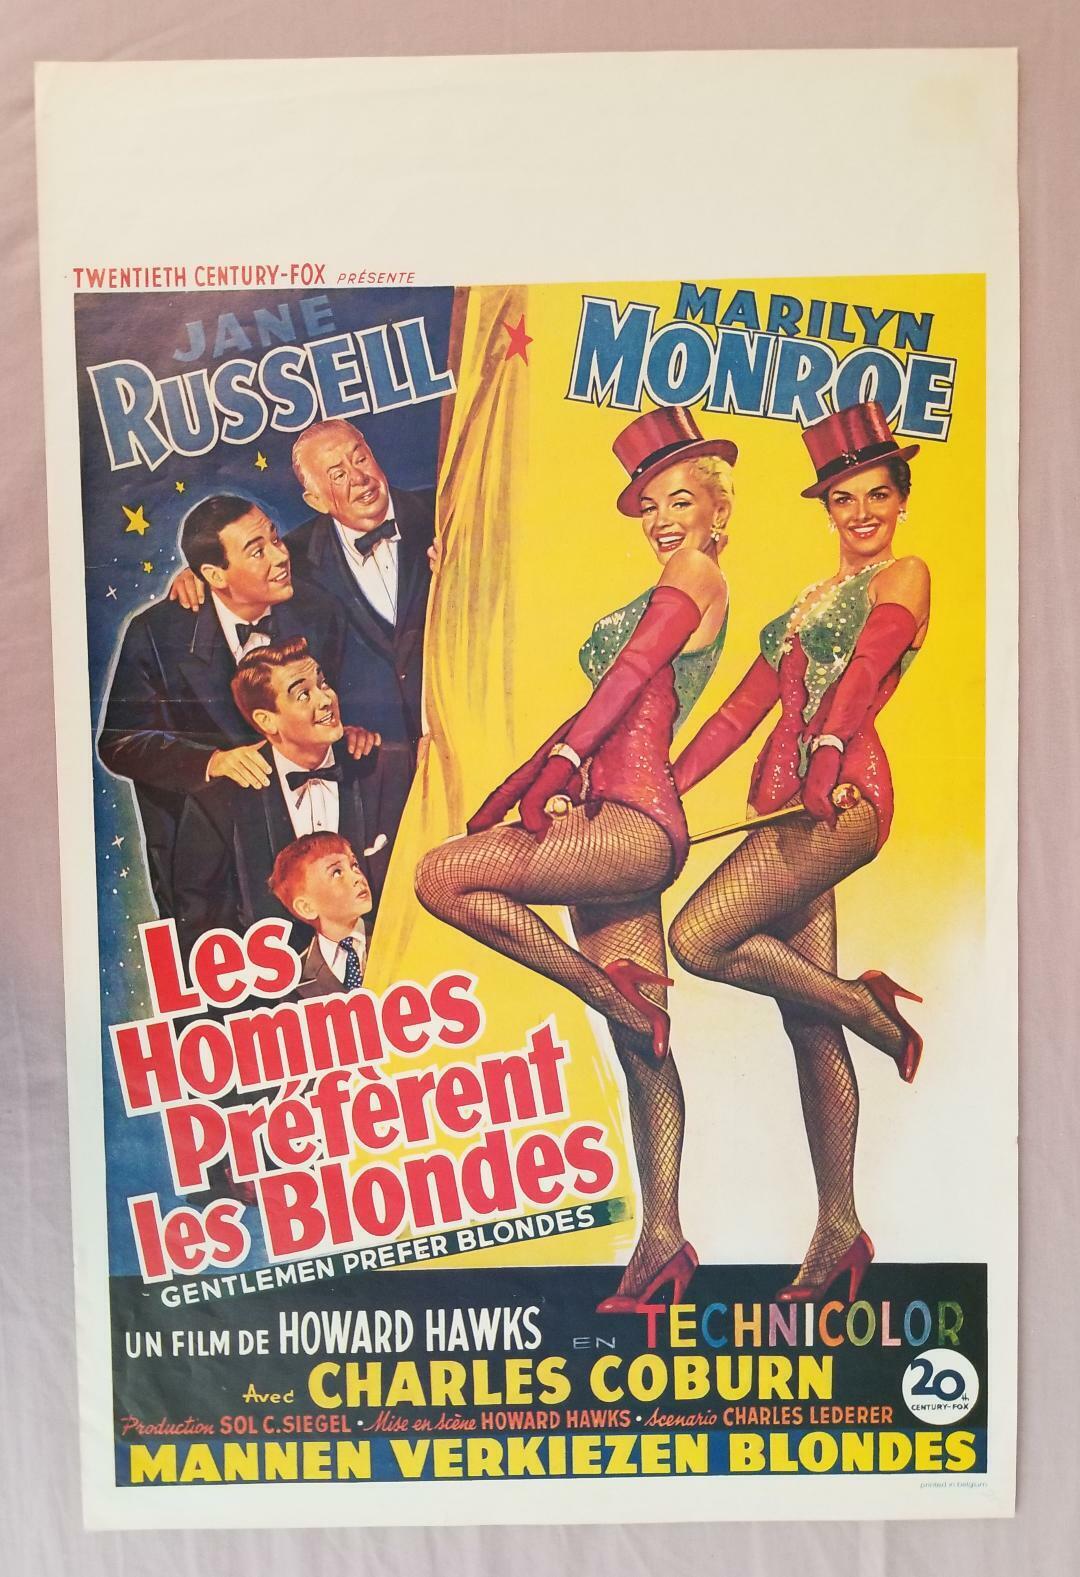 Marilyn Monroe "gentlemen Prefer Blondes" 1953 Original Belgium Movie Poster